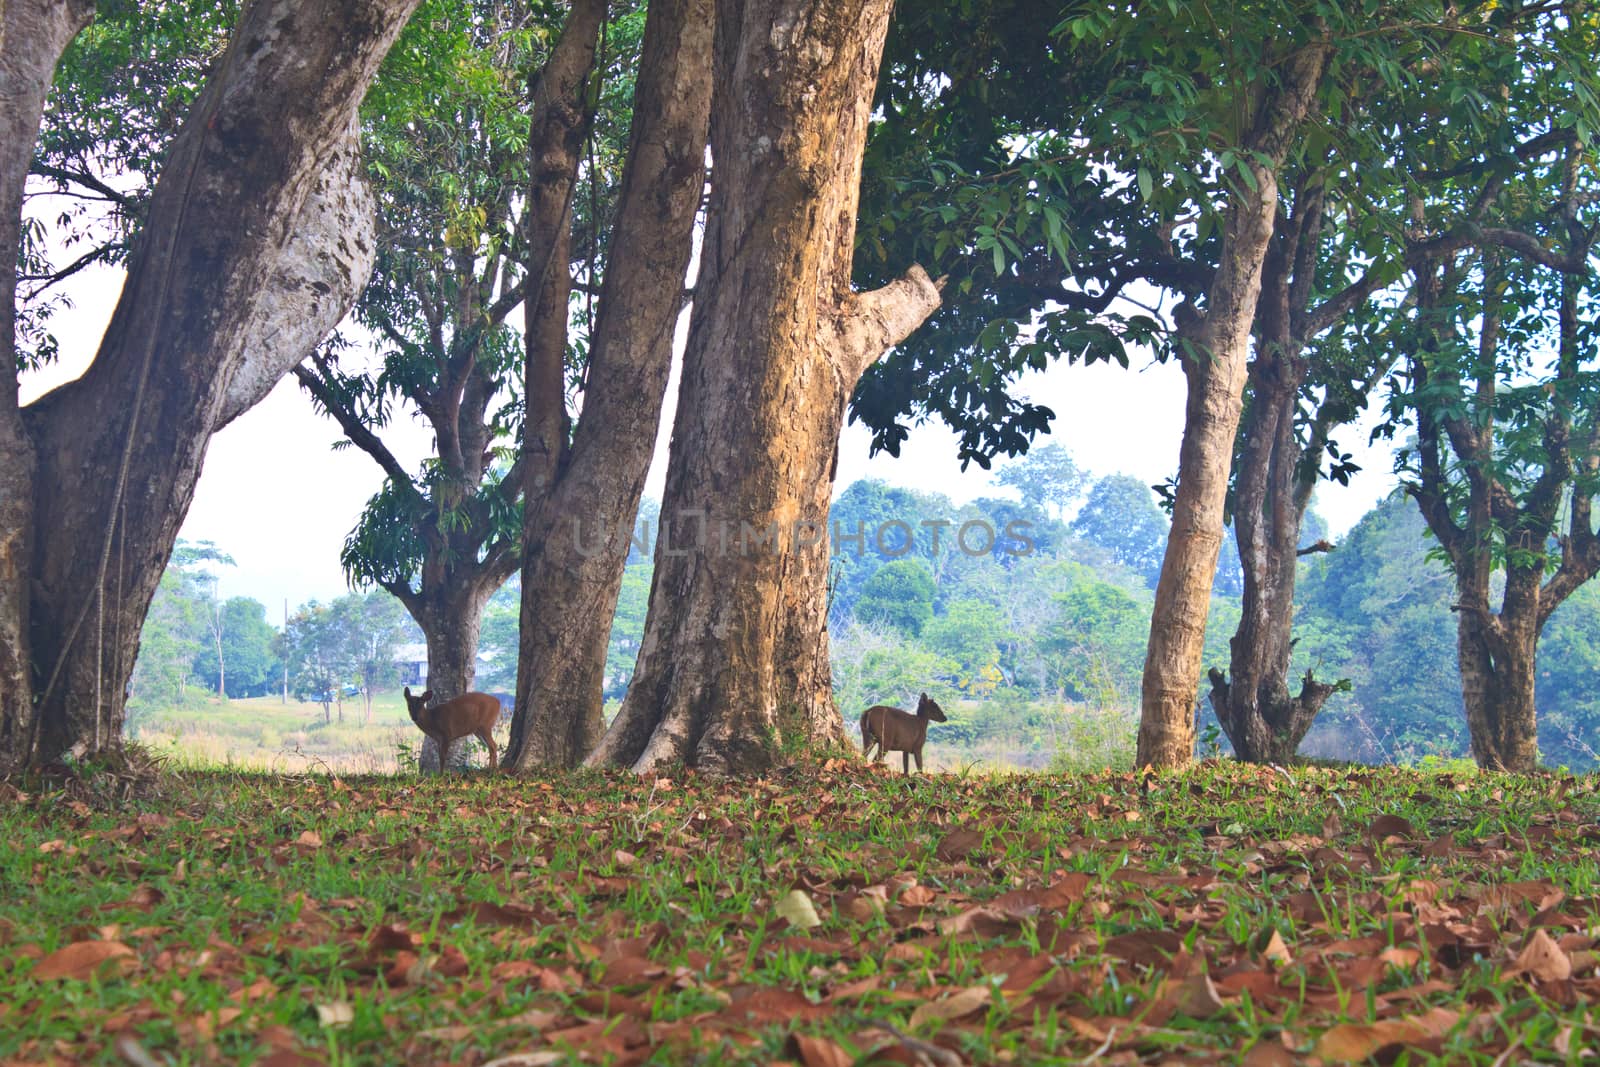 Barking deer or Muntiacus muntjak in a field of grass 